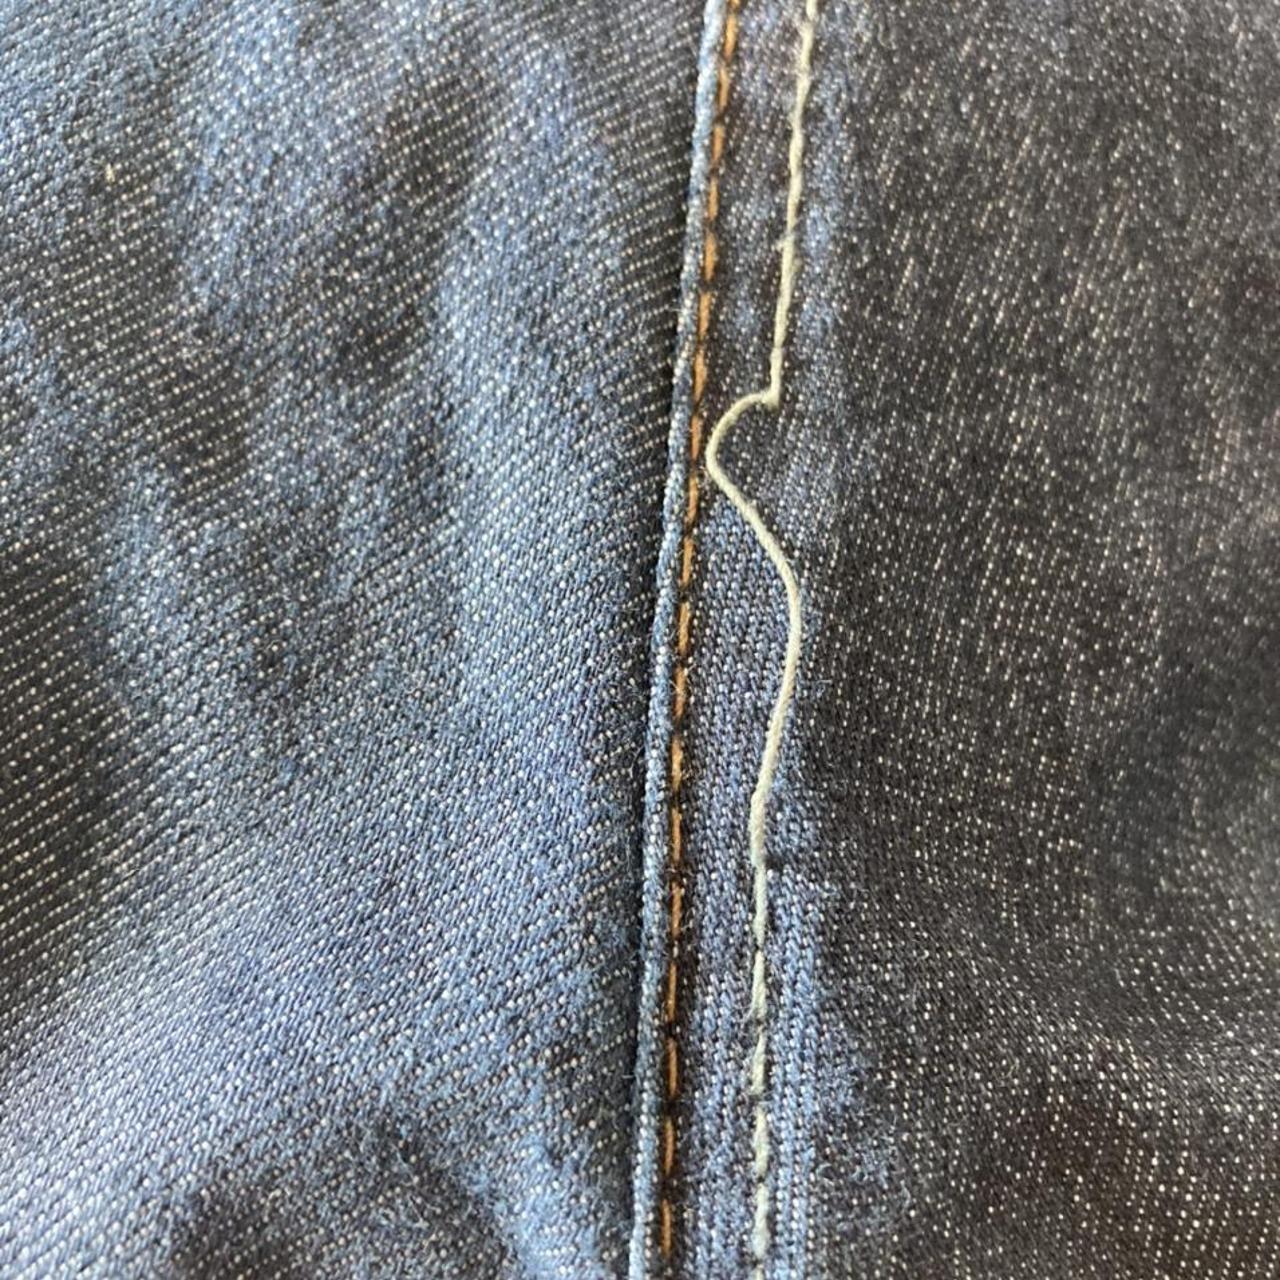 Product Image 4 - Plus size blue jeans, not